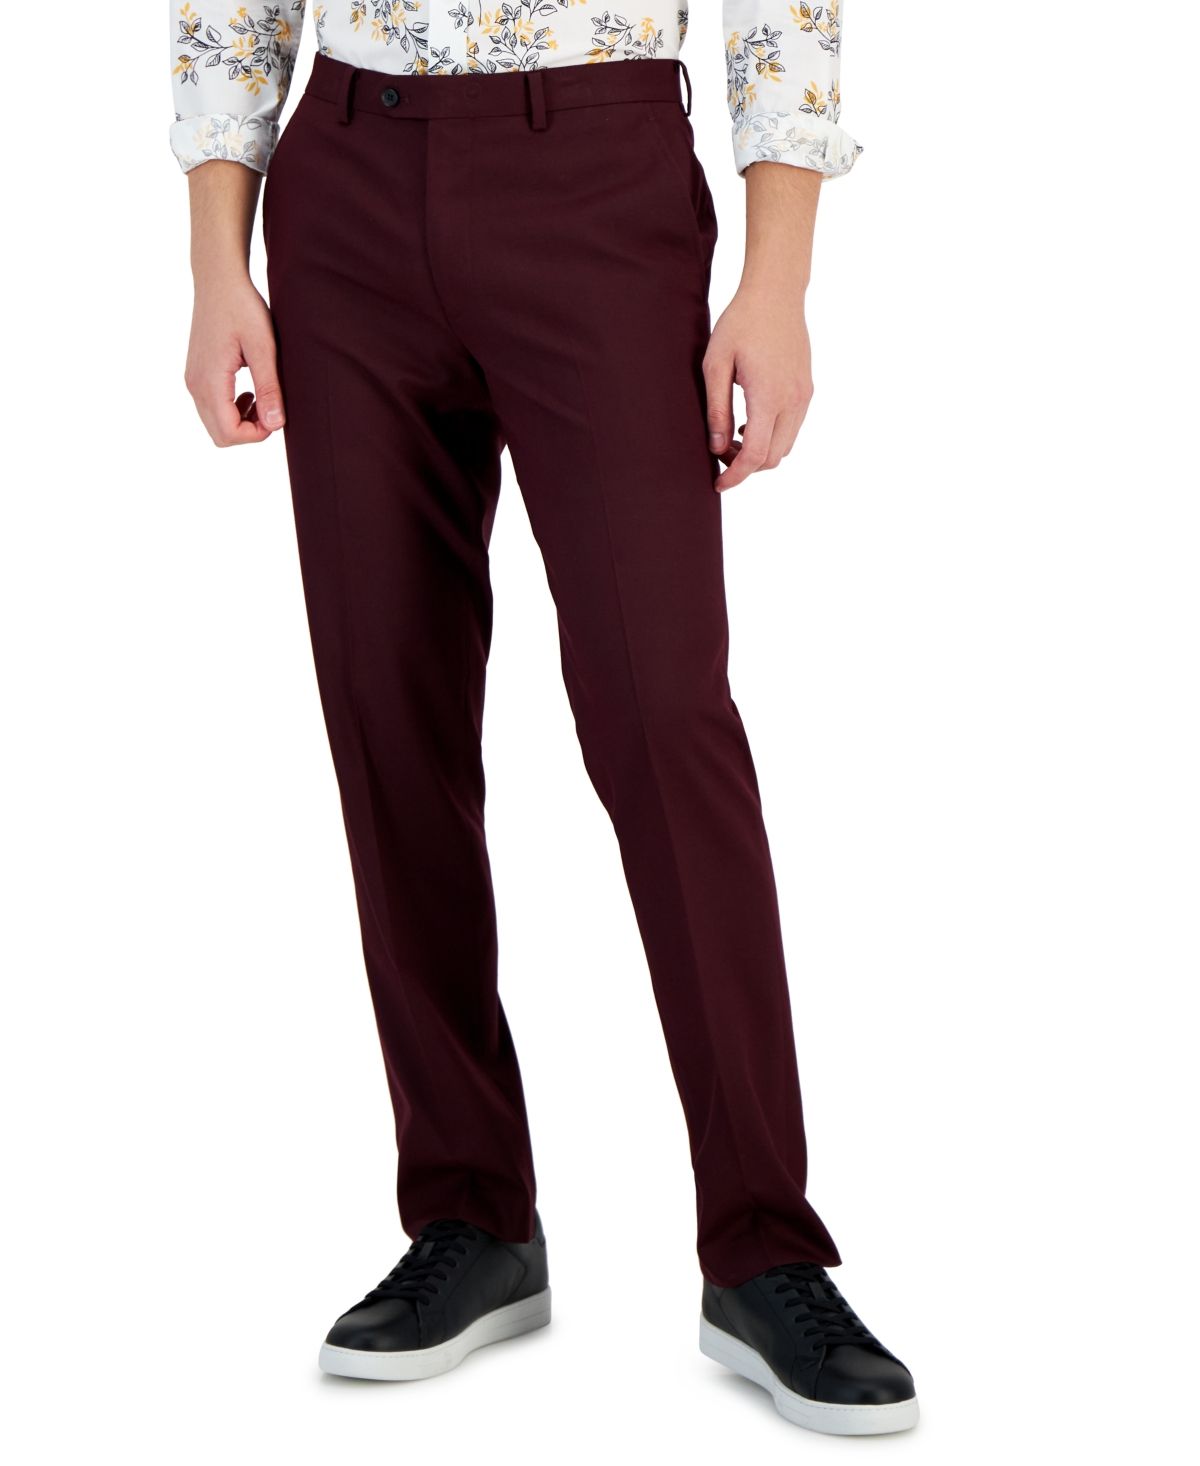 Bar Iii Men's Slim-Fit Burgundy Solid Suit Pants, Created for Macy's | Macys (US)